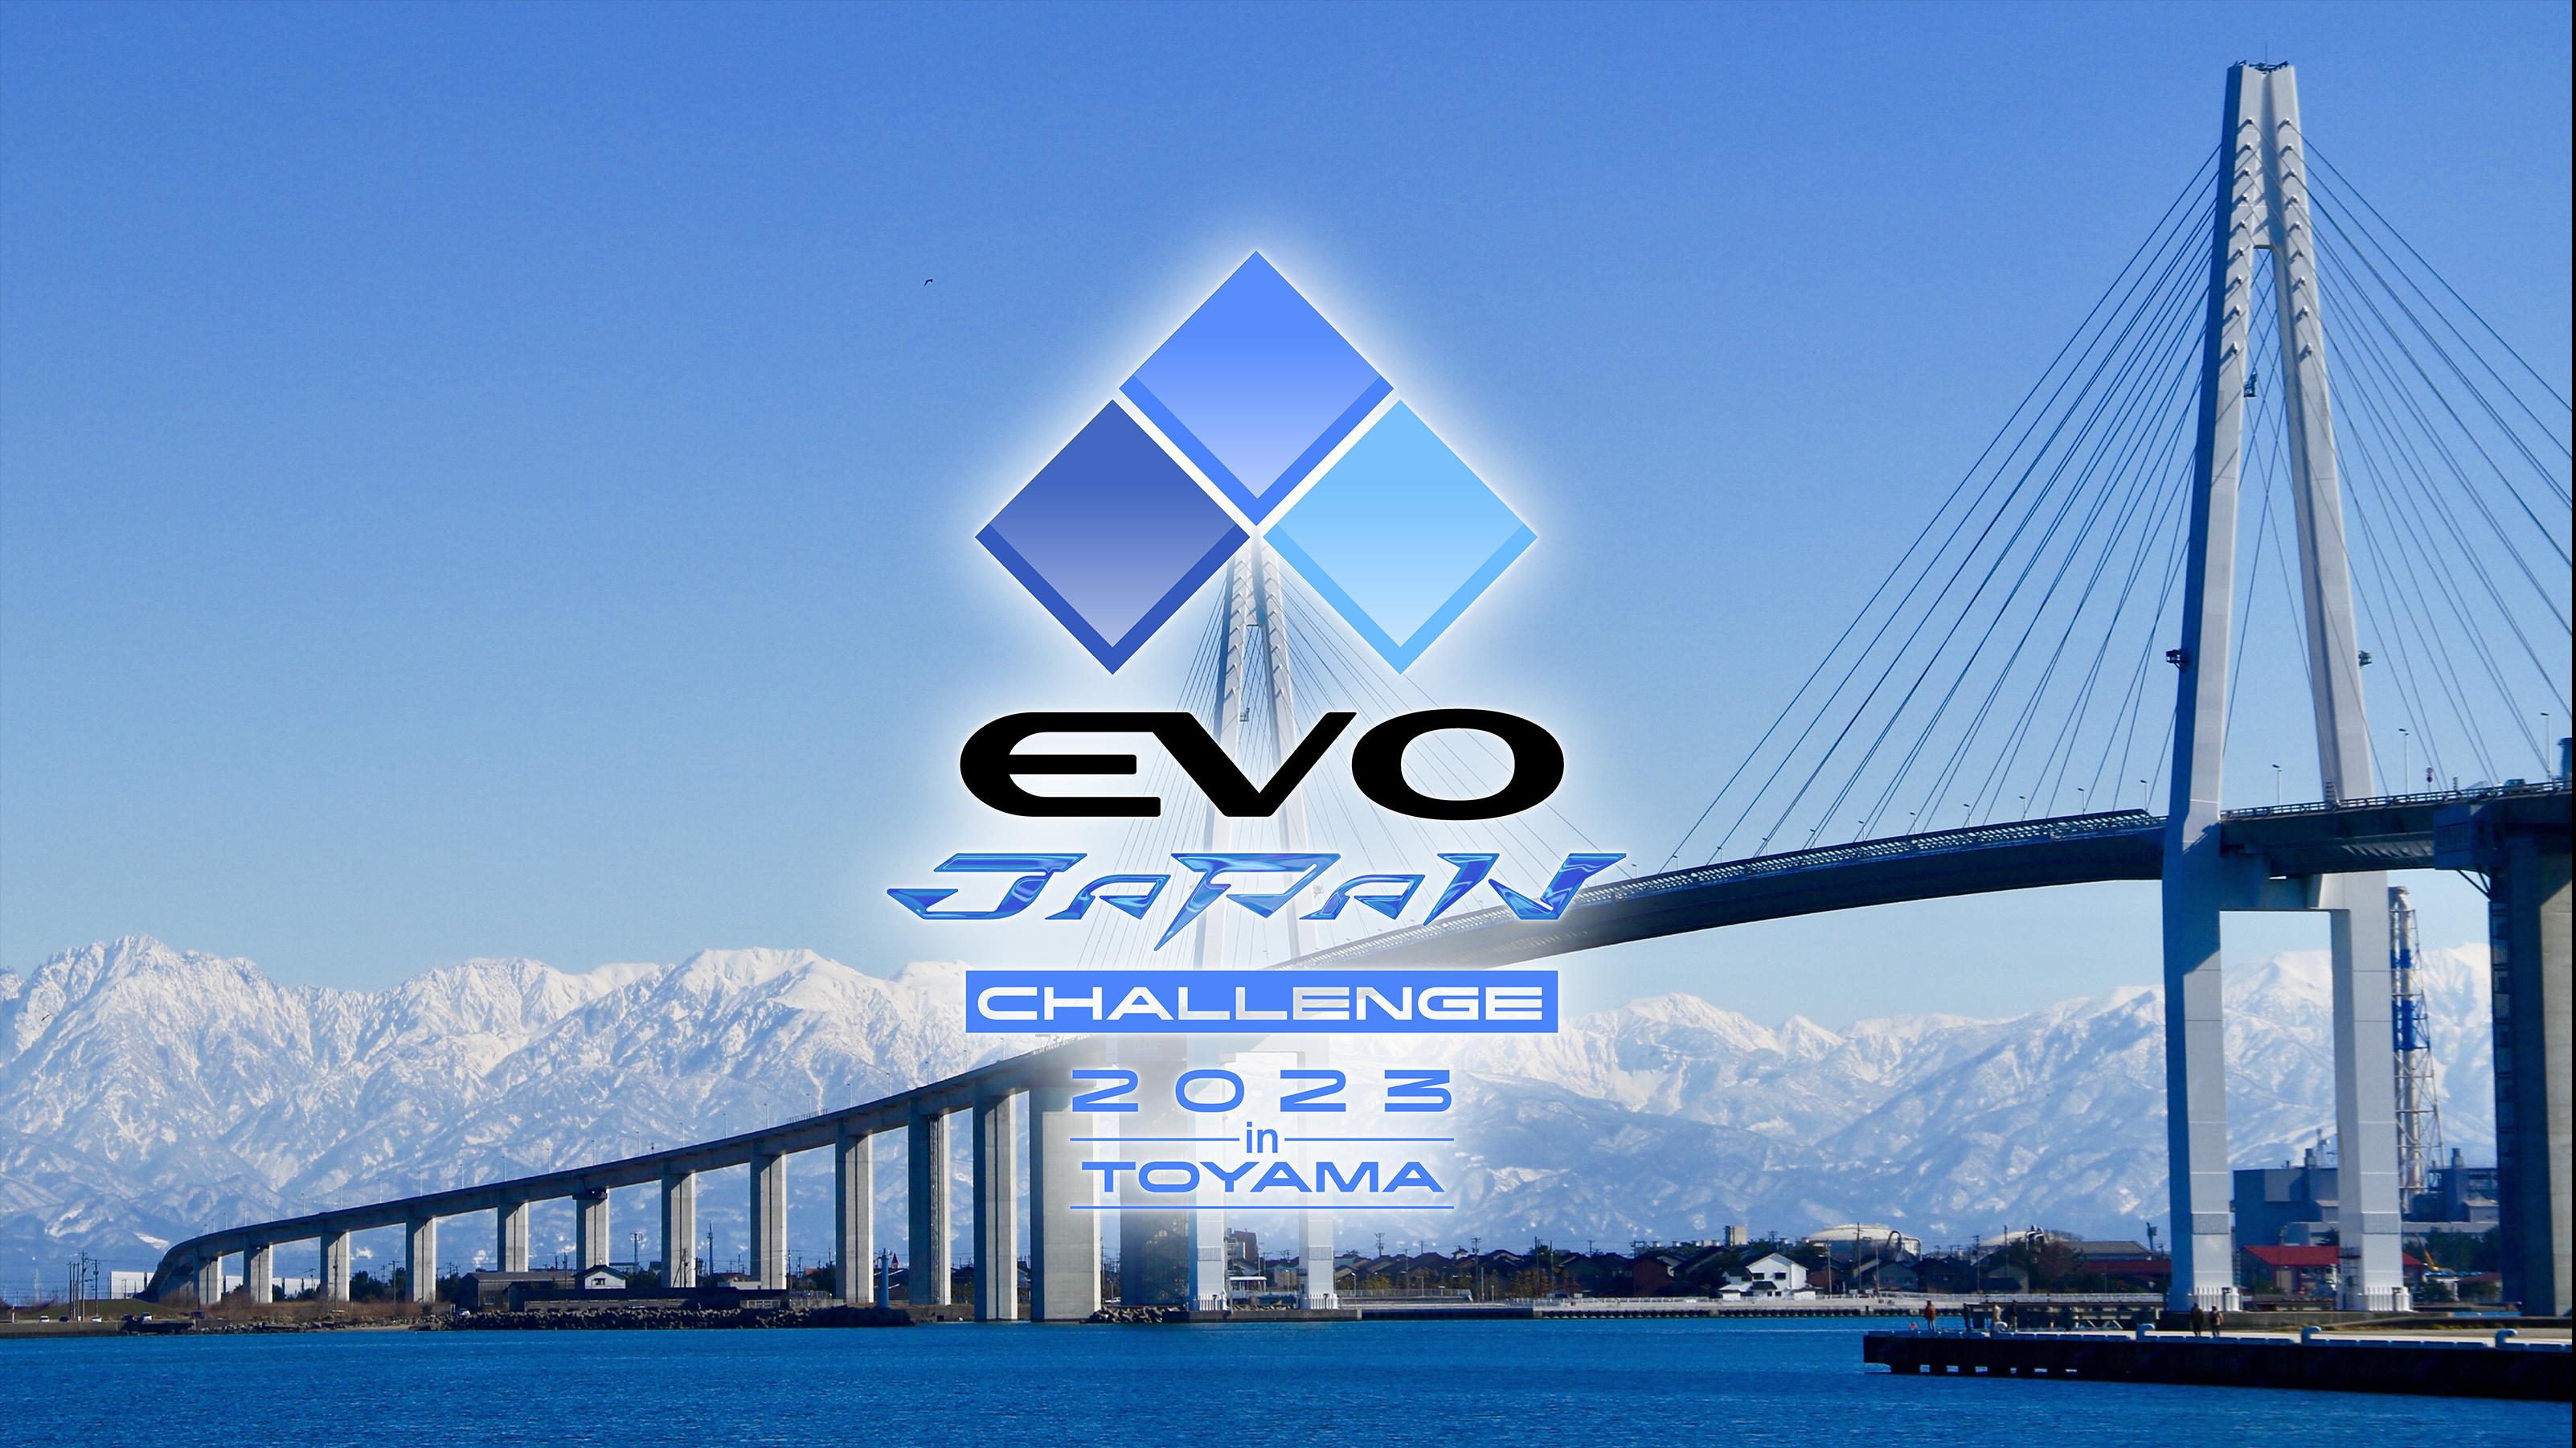 EVO Japan CHALLENGE 2023 in TOYAMAの見出し画像